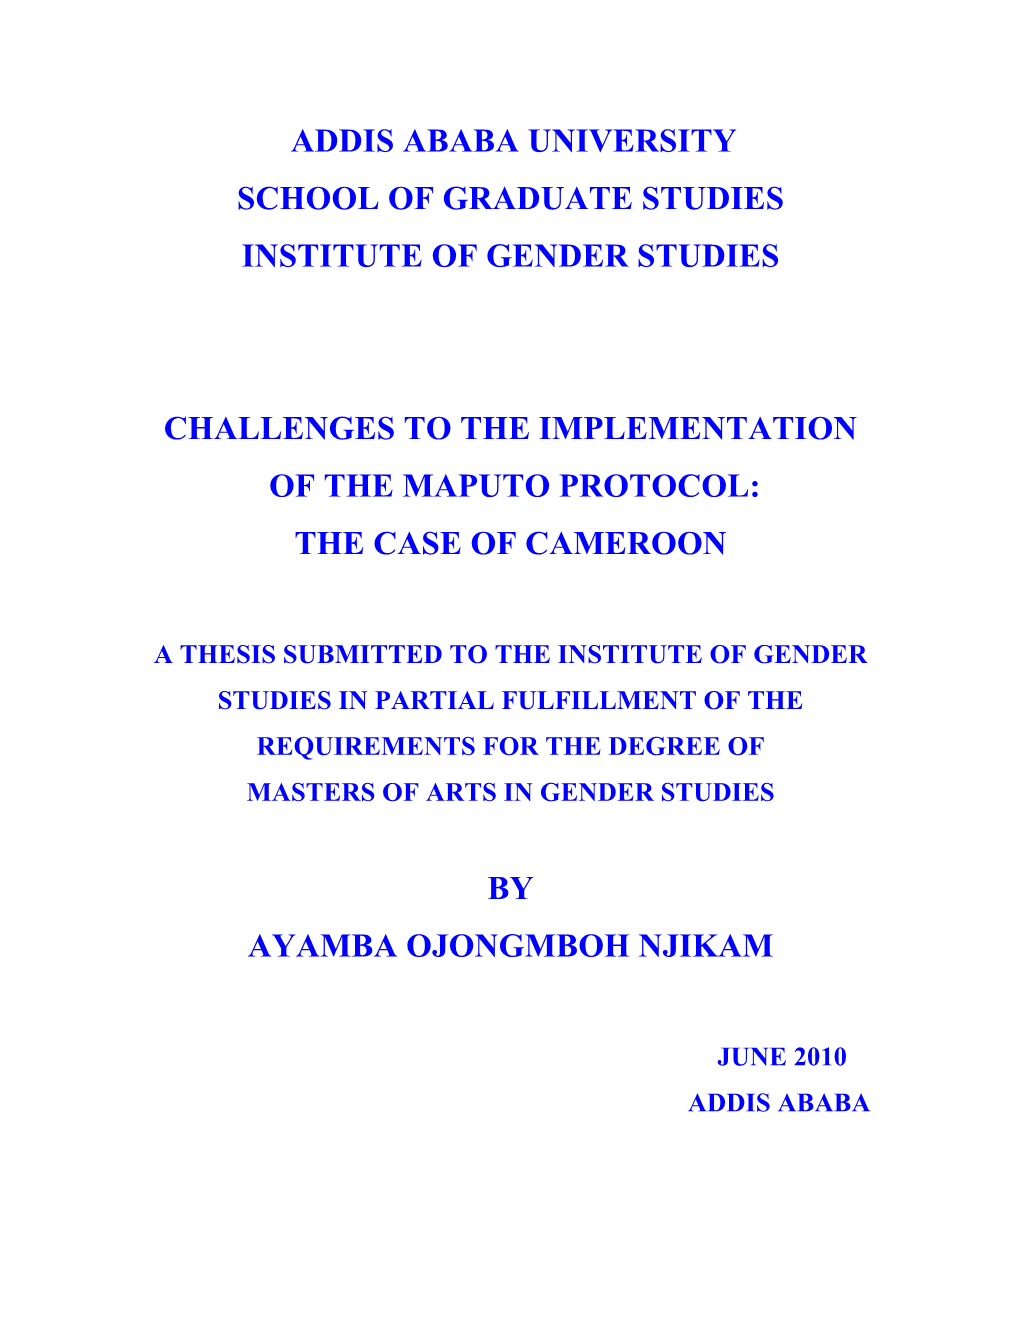 Addis Ababa University School of Graduate Studies Institute of Gender Studies